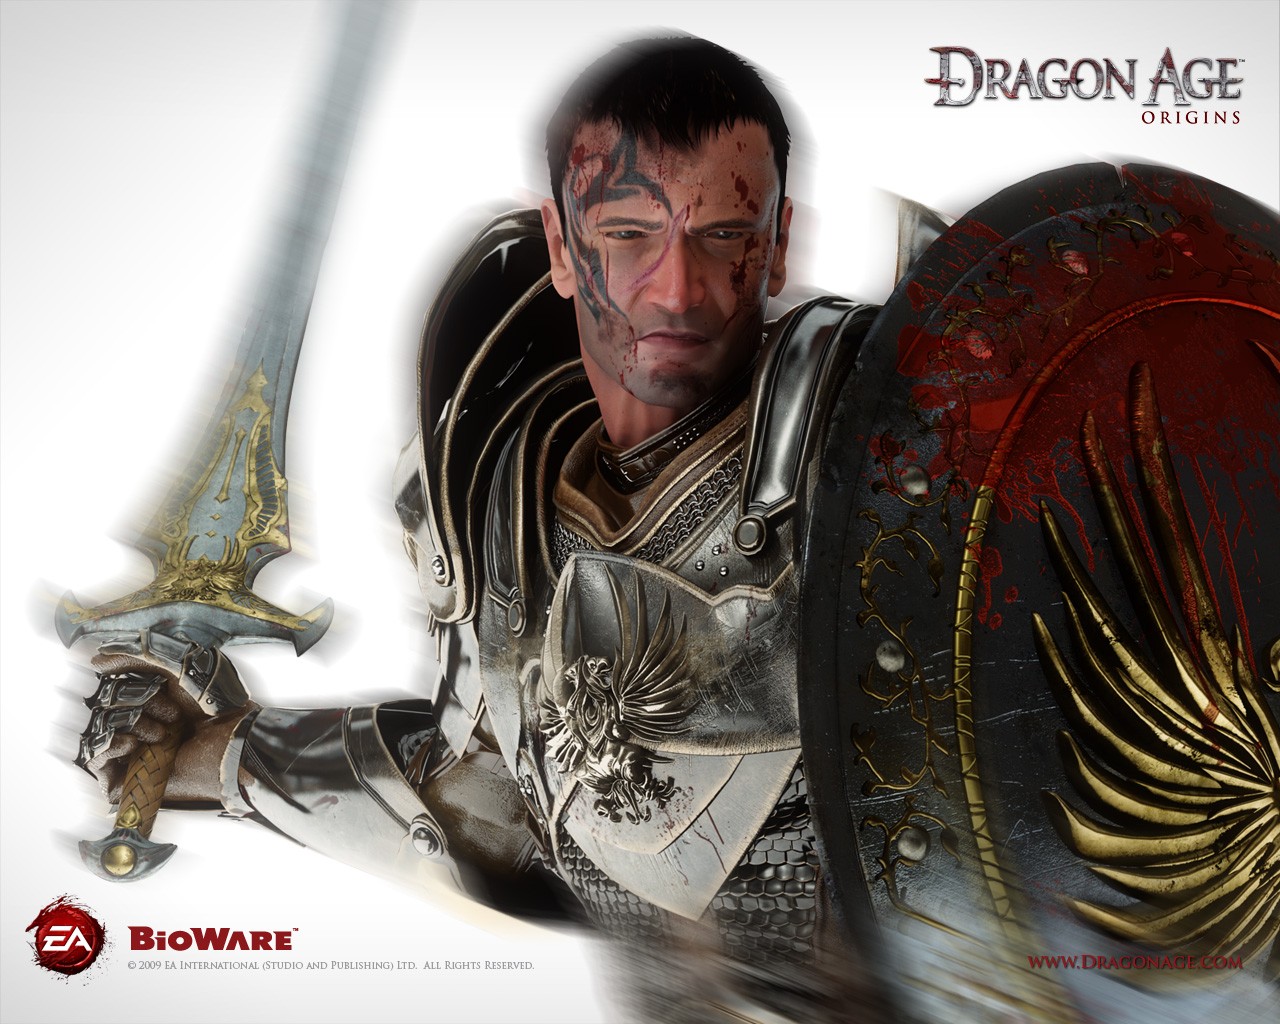 General 1280x1024 Dragon Age: Origins video games 2009 (Year) RPG sword Bioware PC gaming fantasy men video game men shield armor simple background white background Electronic Arts